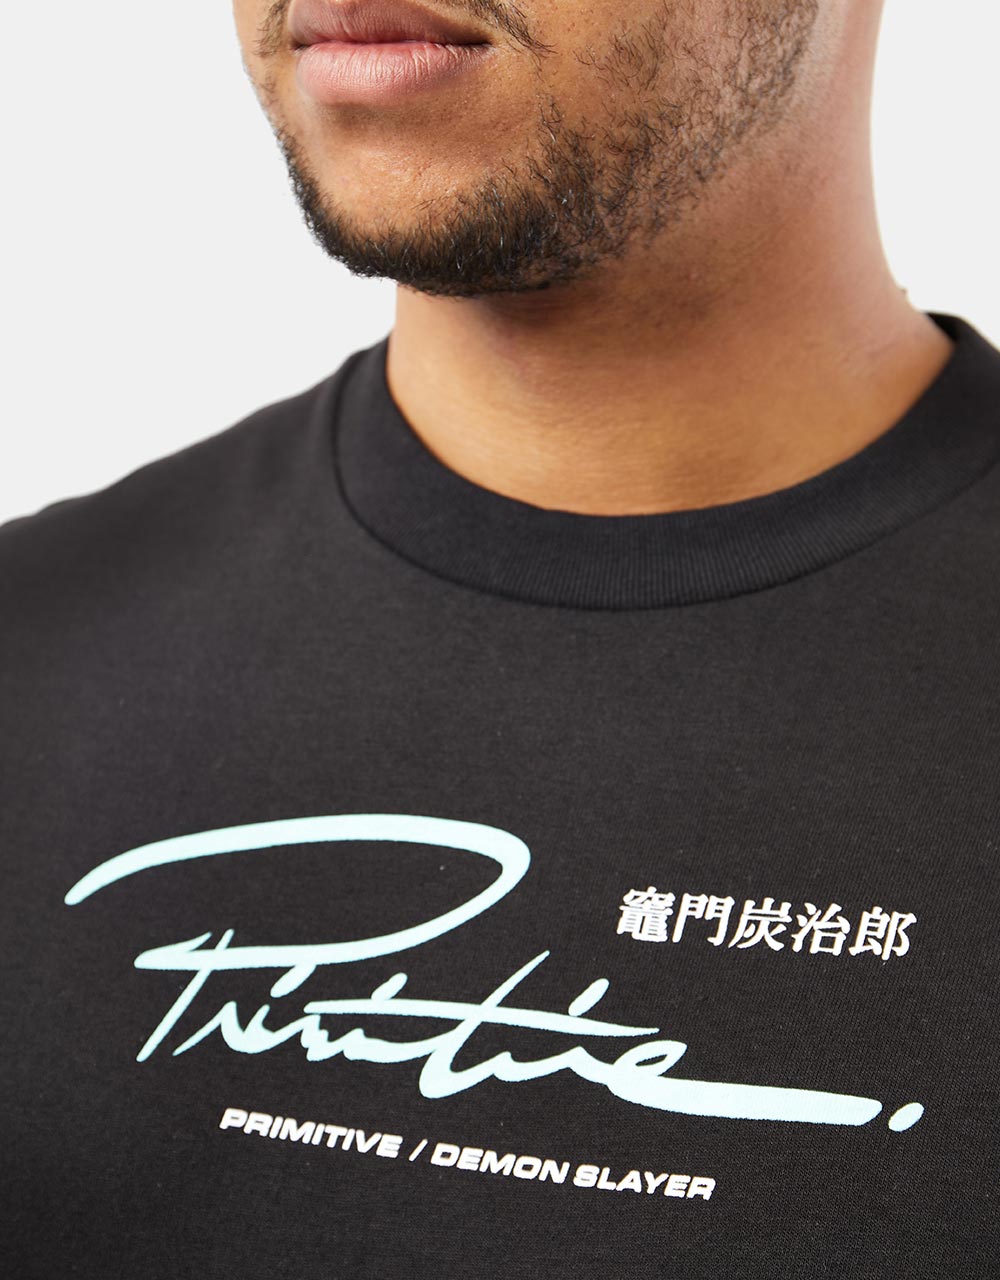 Primitive x Demon Slayer Tanjiro T-Shirt - Black